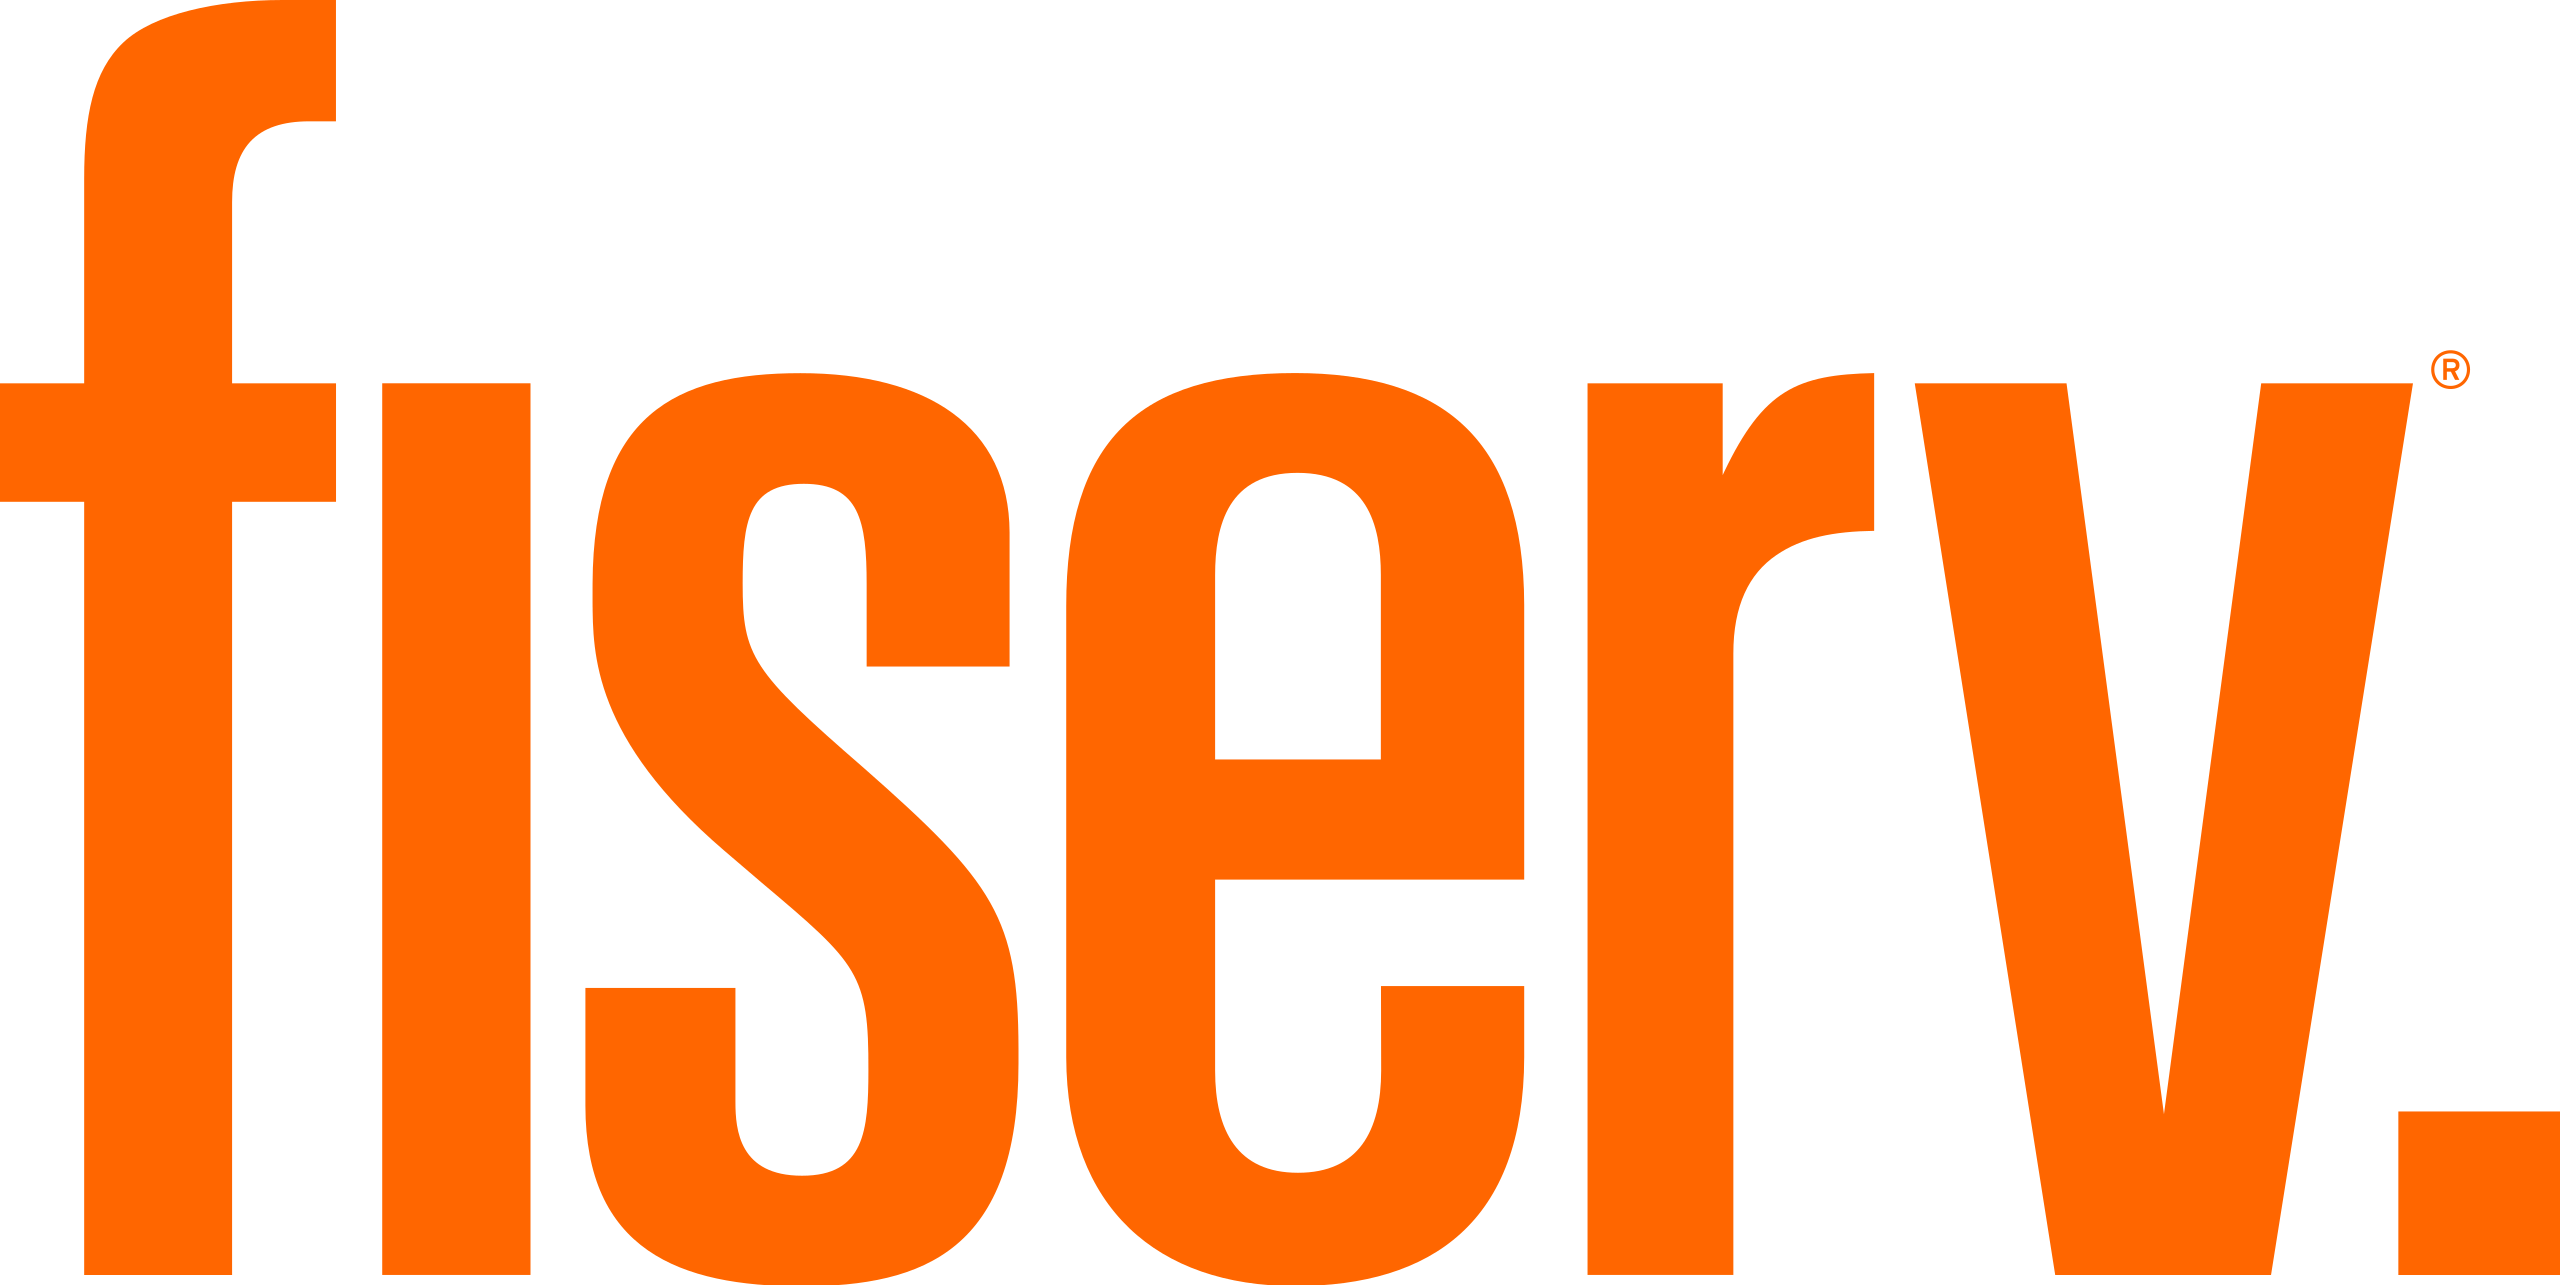 Fiserv - logo